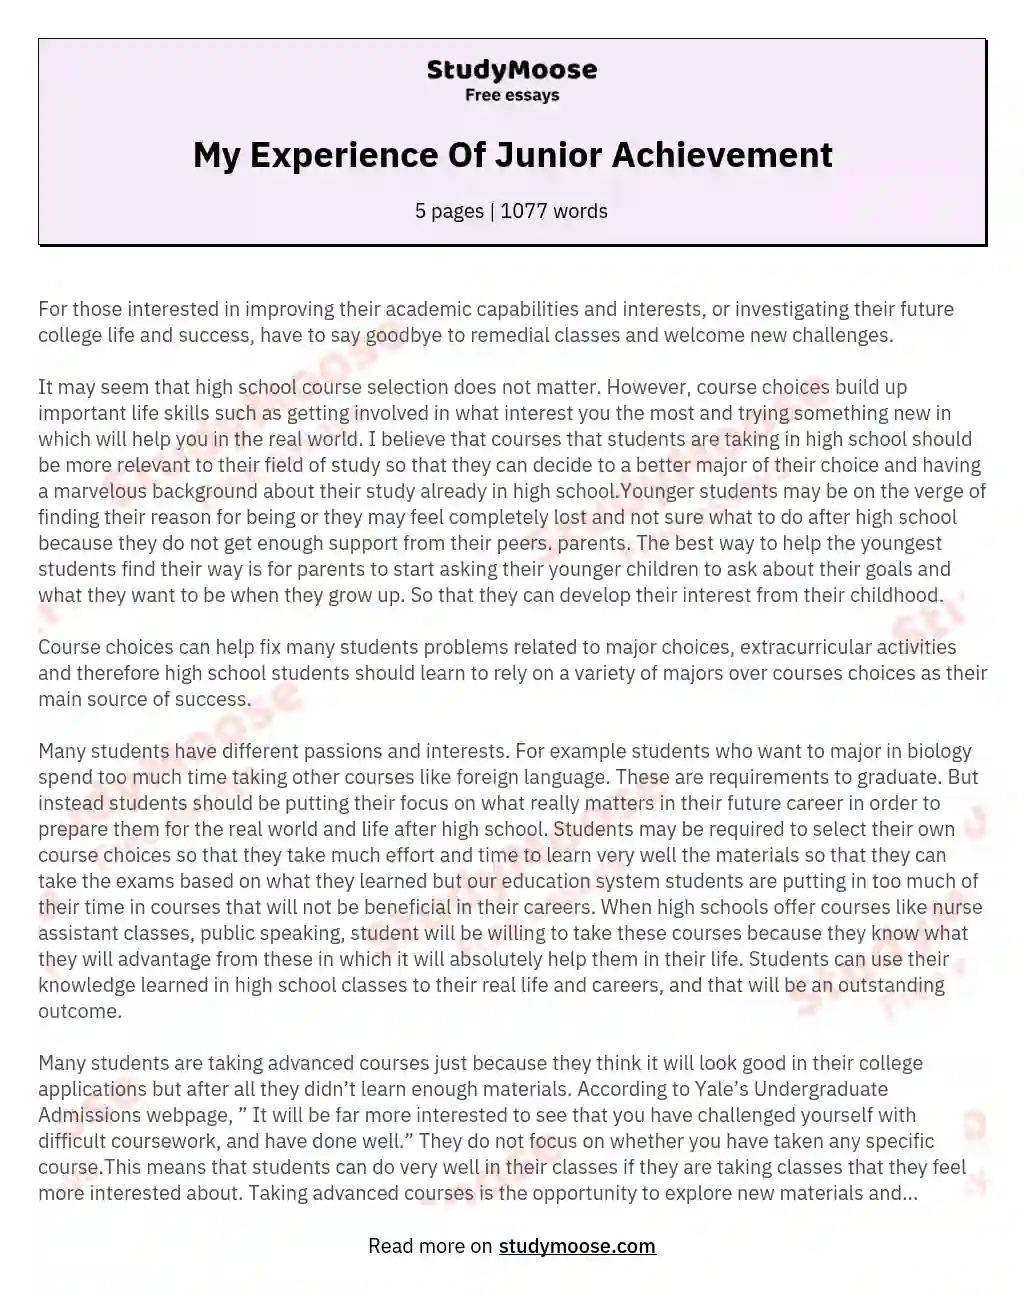 My Experience Of Junior Achievement essay